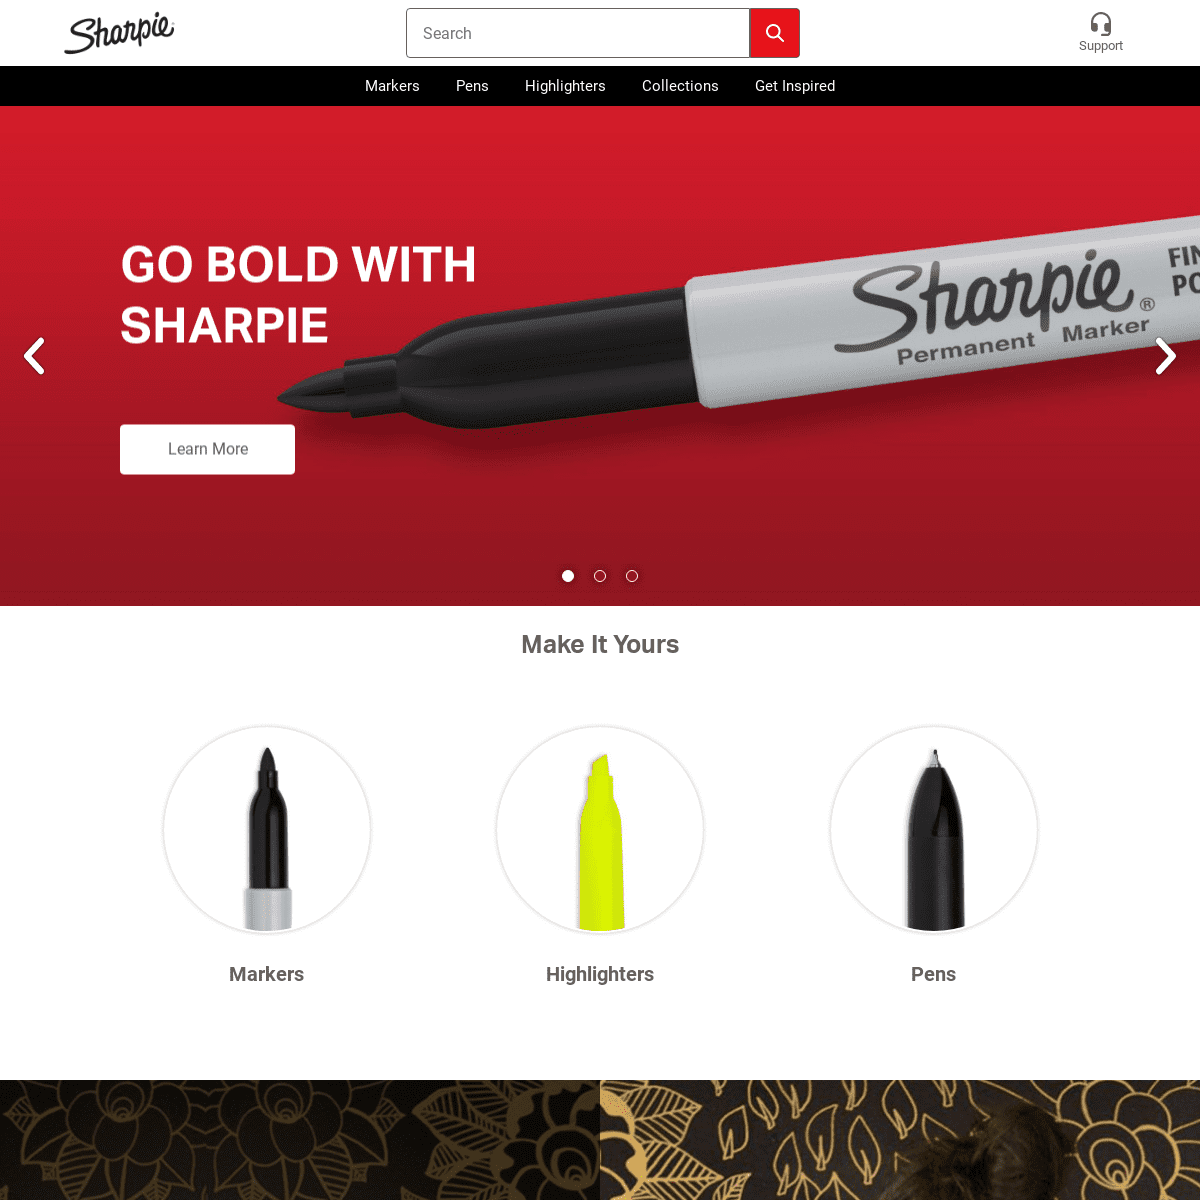 A complete backup of sharpie.com